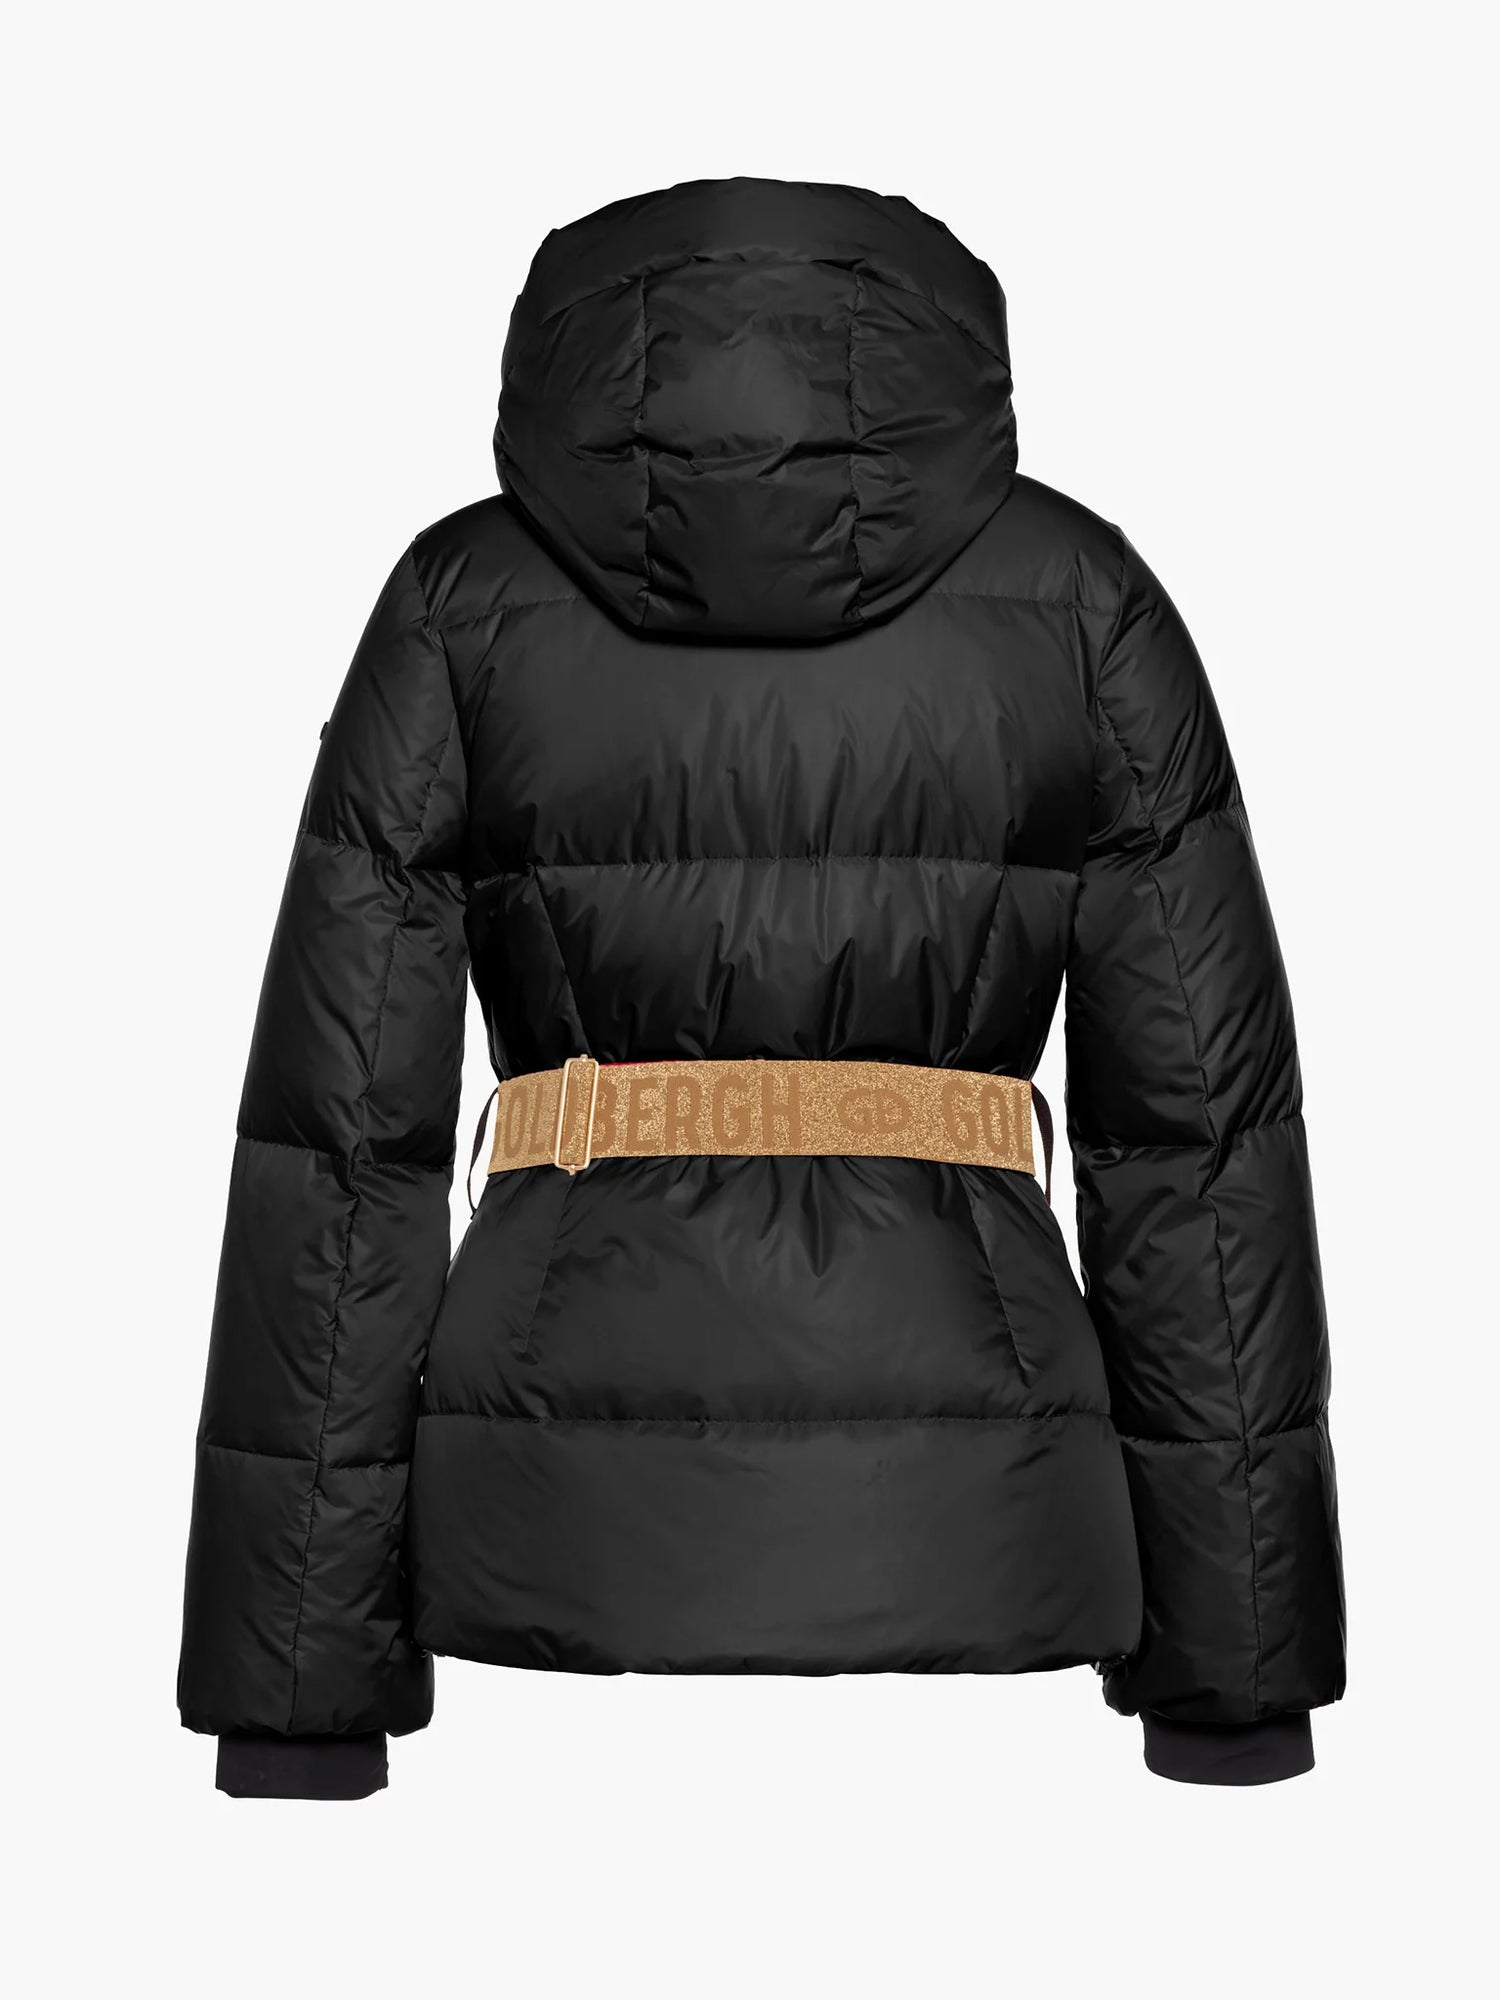 SNOWMASS ski jacket, black